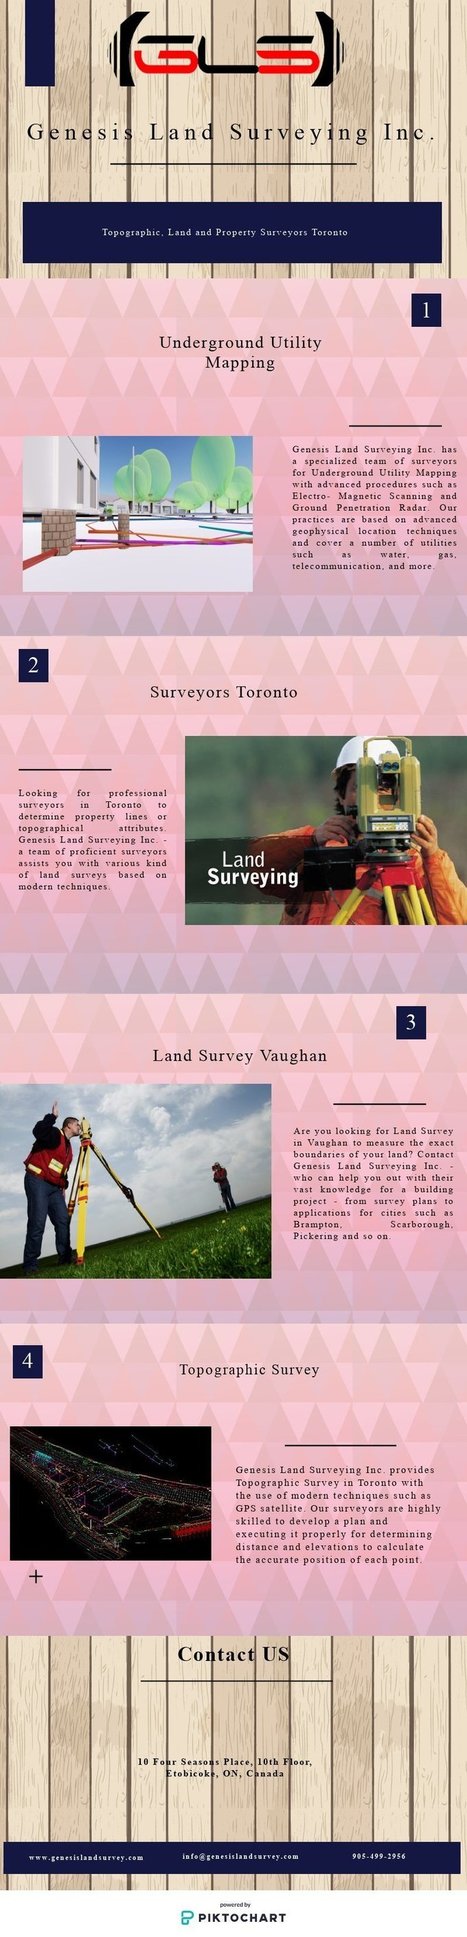 Land Surveyors Toronto Genesis Land Surveying - ontario land surveyors piktochart visual editor genesis land surveying scoop it